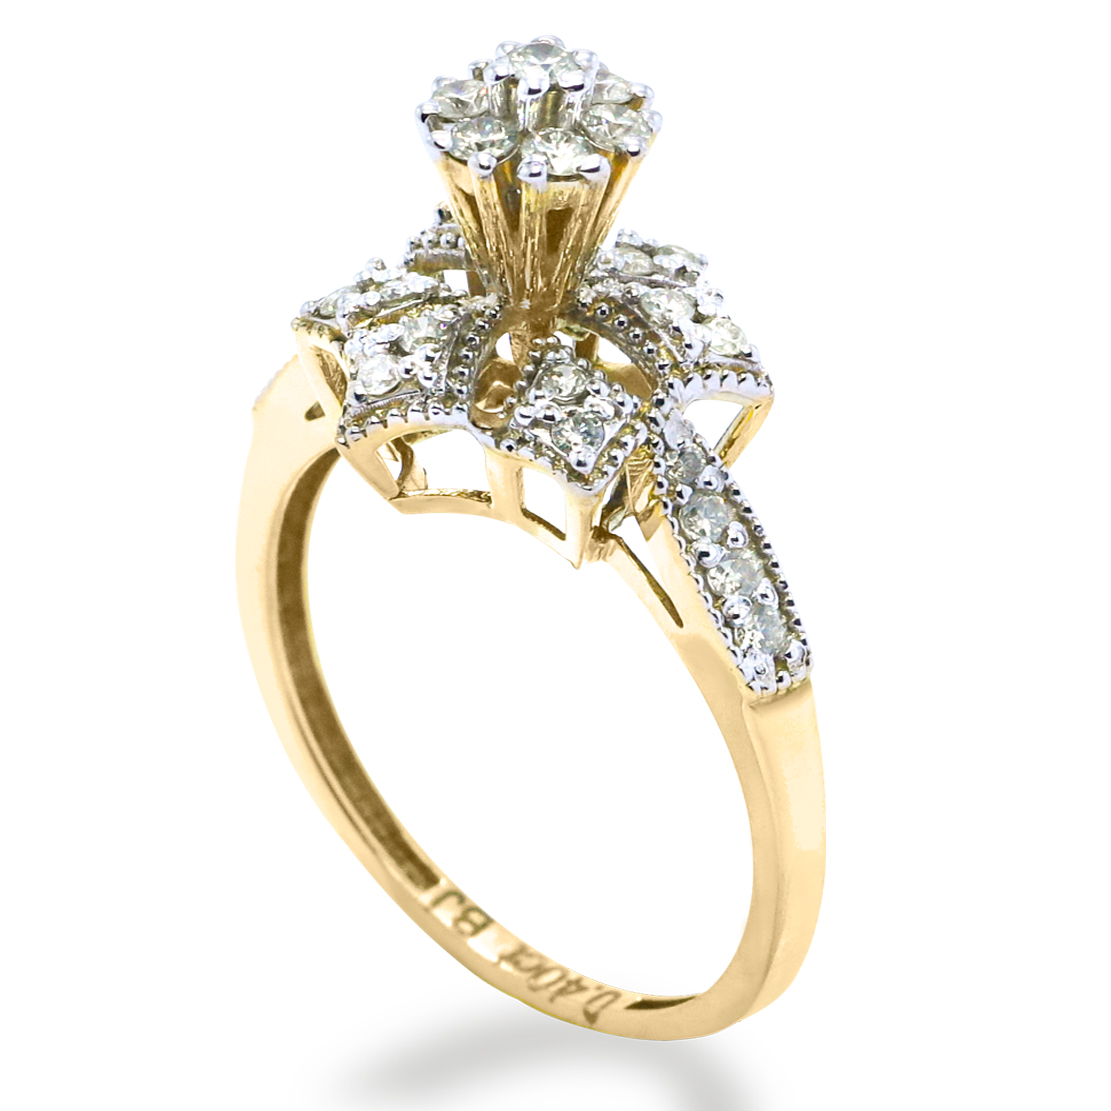 Onirique 18K Gold Diamond Ring D-6182